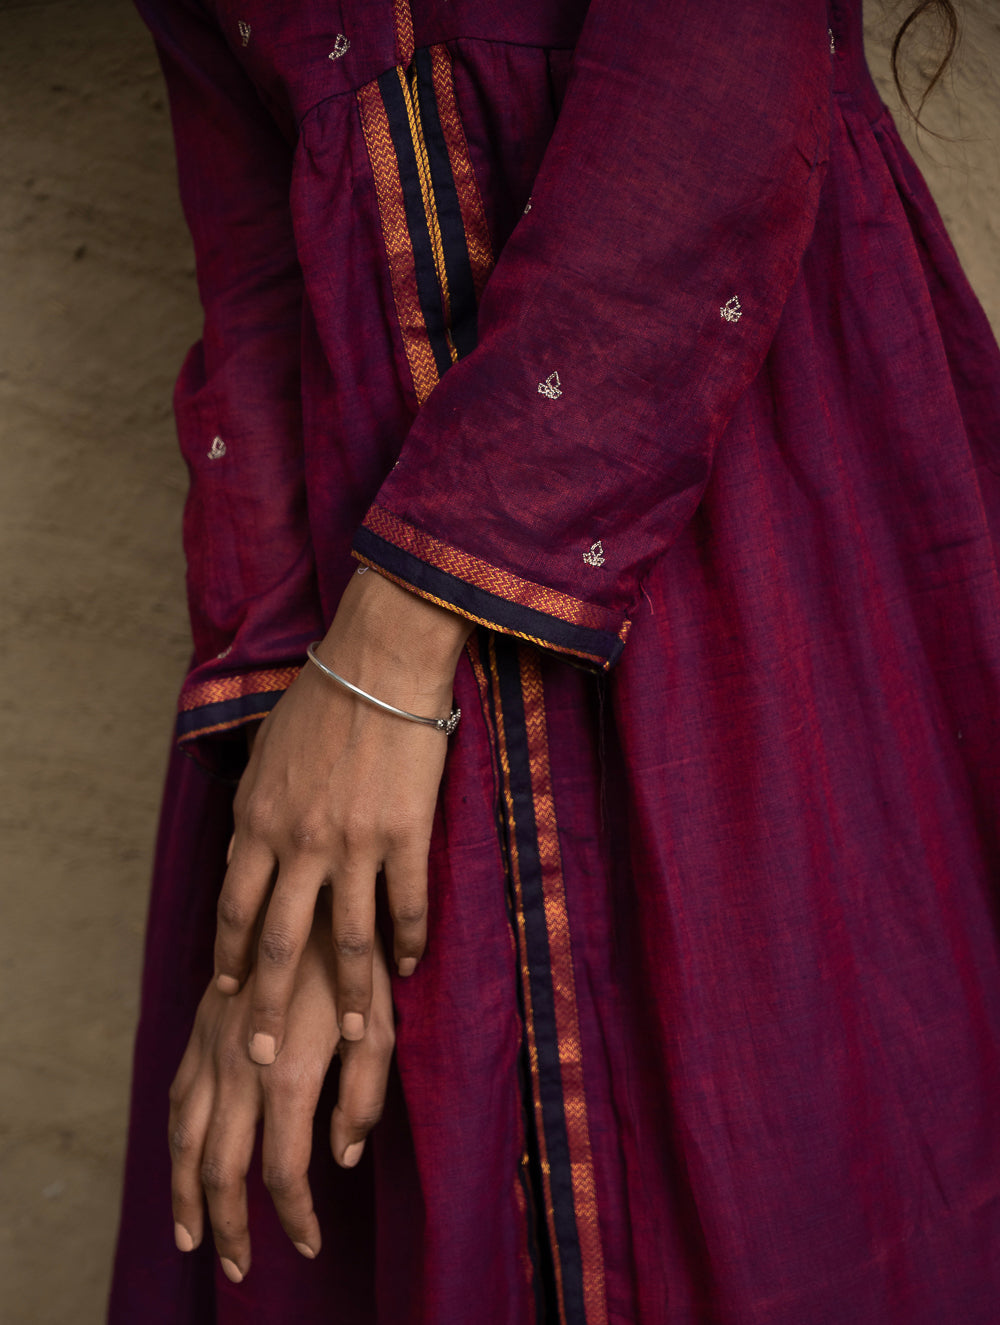 Load image into Gallery viewer, Traditional Elegance. Hand Embroidered Ilkal &amp; Zardozi Ethnic  Kurta / Dress - Regal Plum